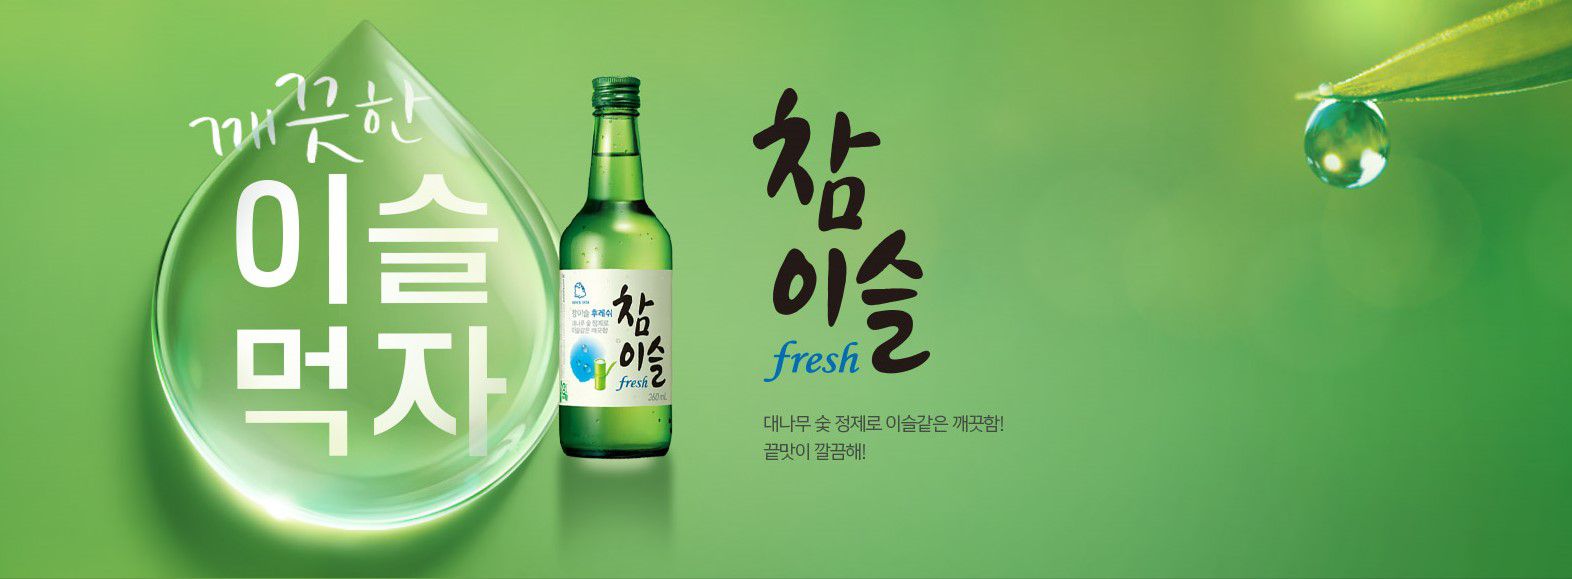 韓國食品-[Hitejinro] 燒酒 [藍色] 360ml